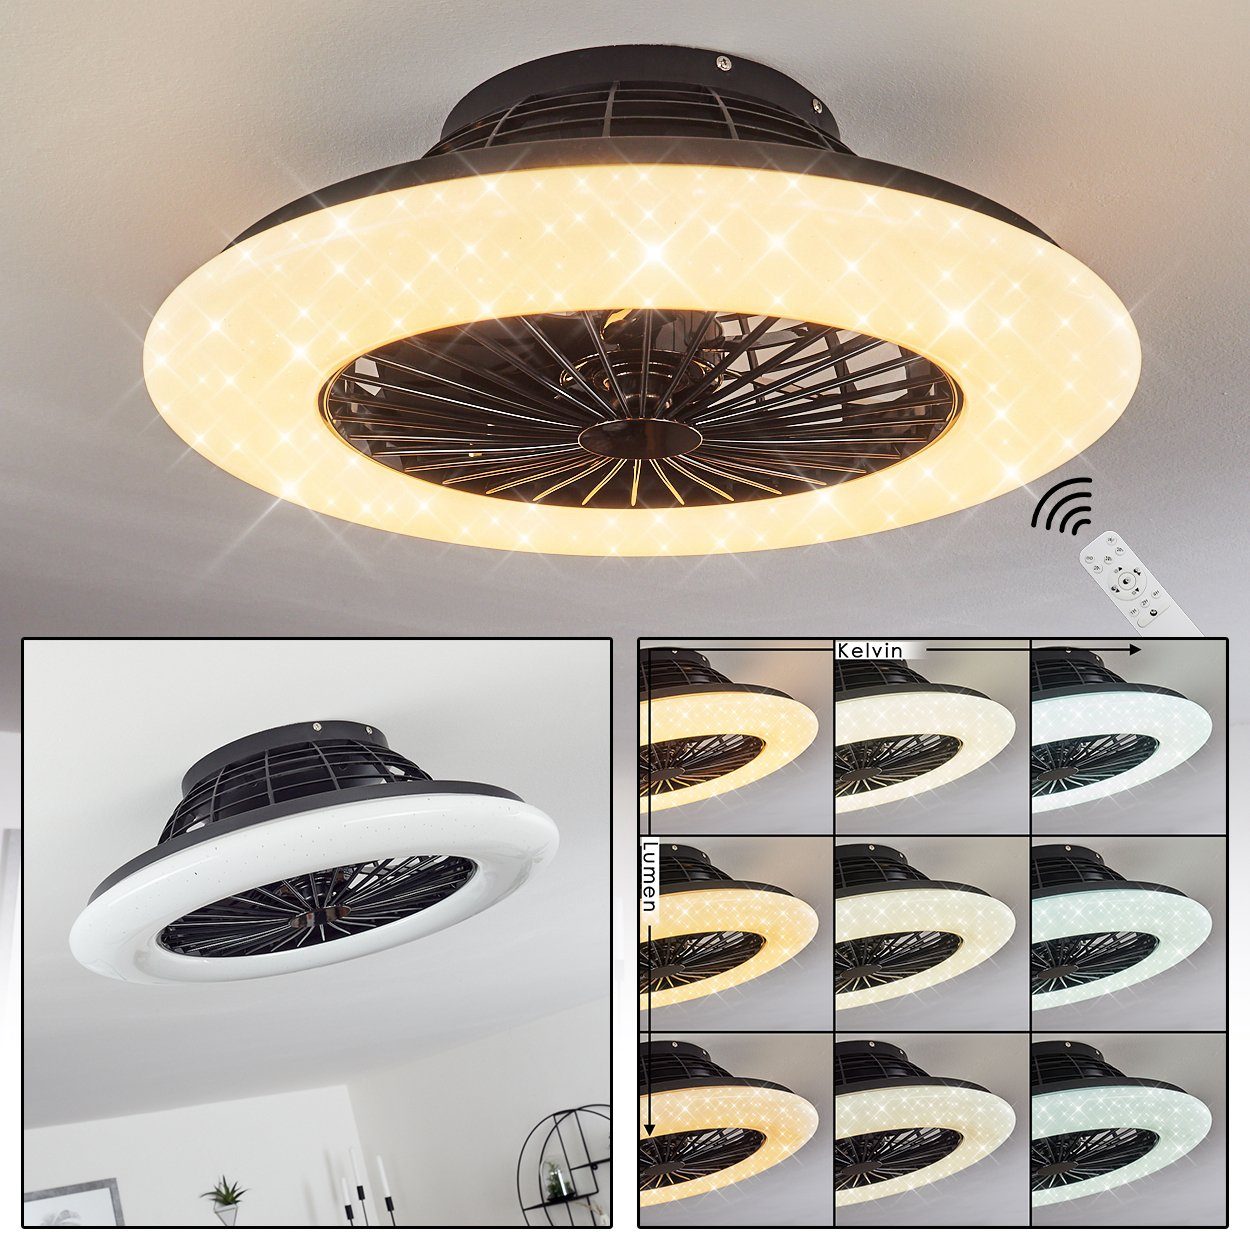 Metall, »Concas« Deckenlampe, Ventilator aus Tischturmventilator Schwarz, hofstein Weiß Kunststoff,